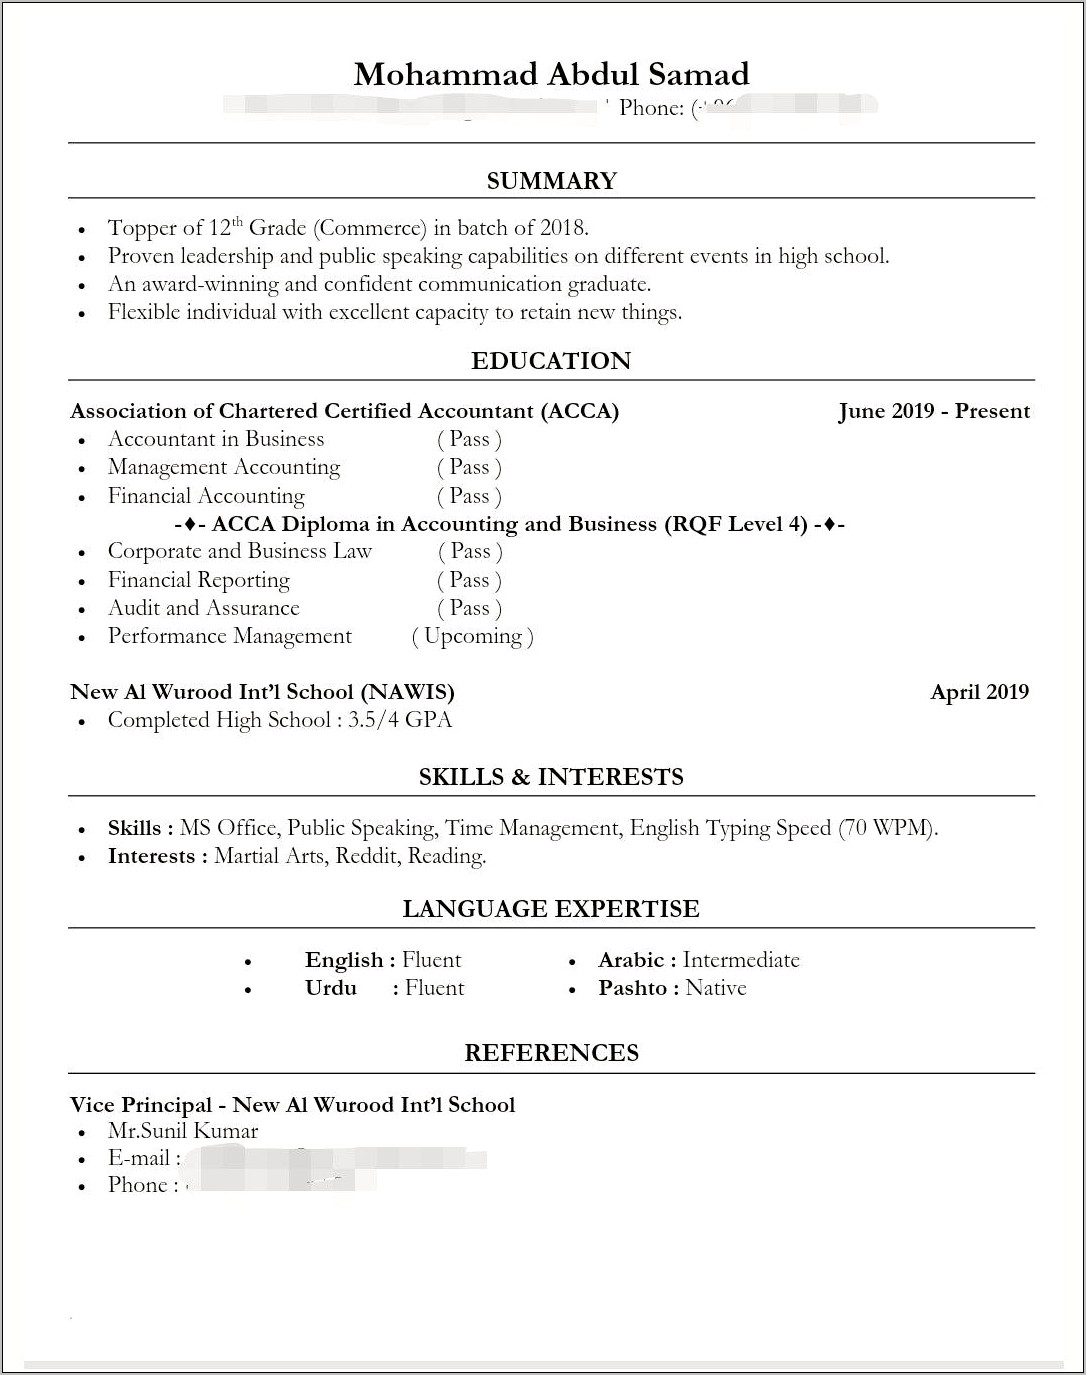 Resume And Cover Letter Fbi Internship Reddit